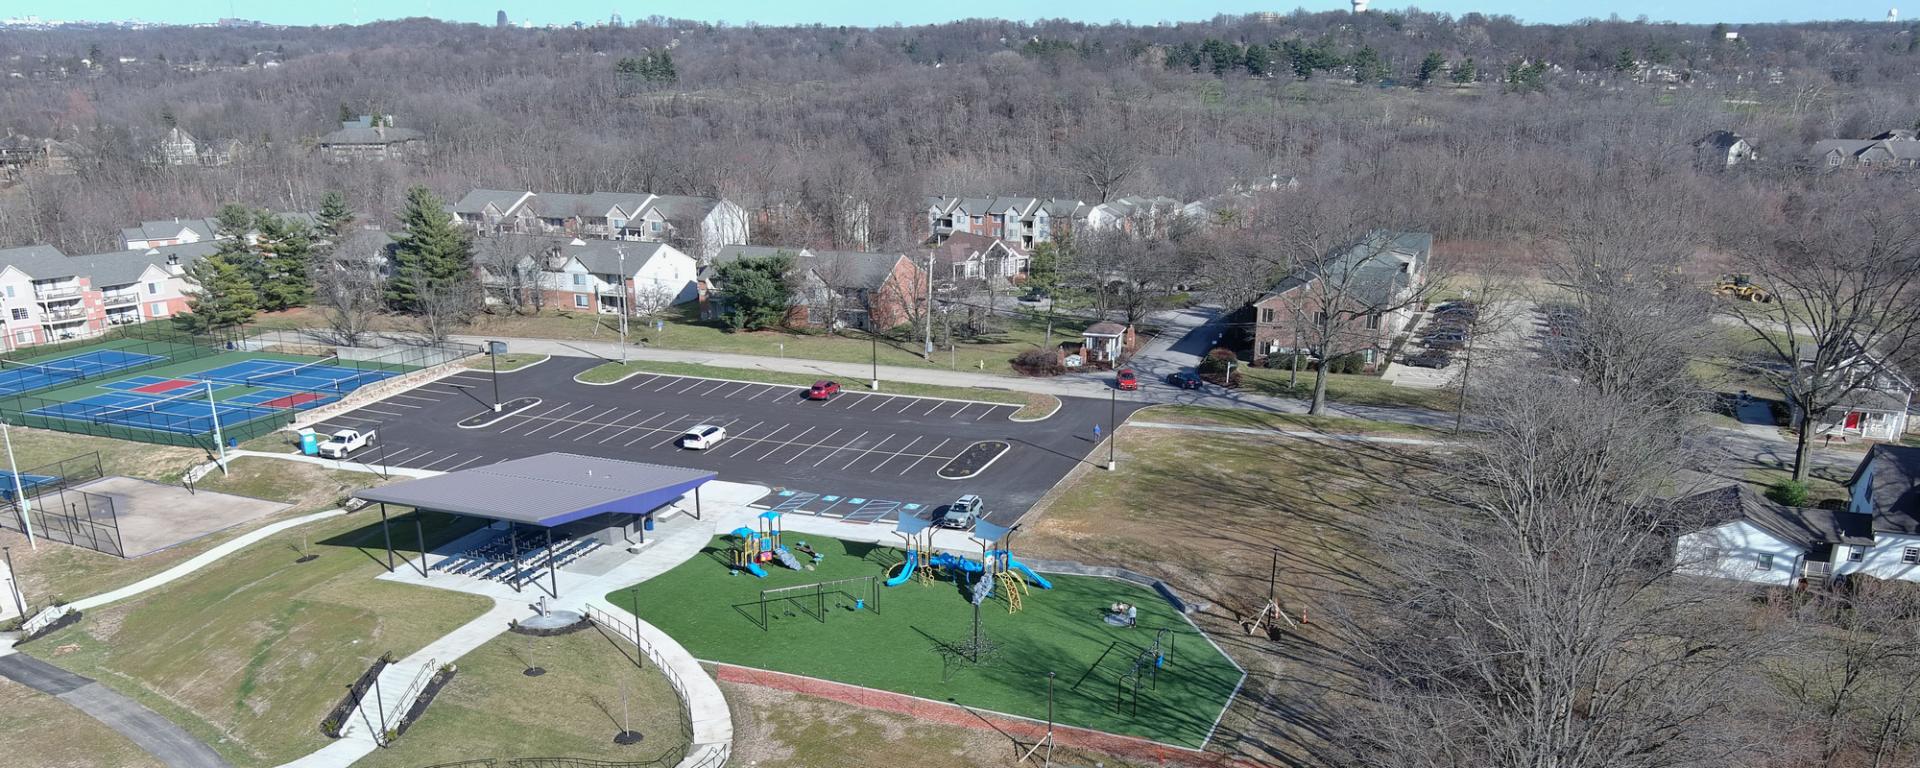 aerial photo of playground and pavilion